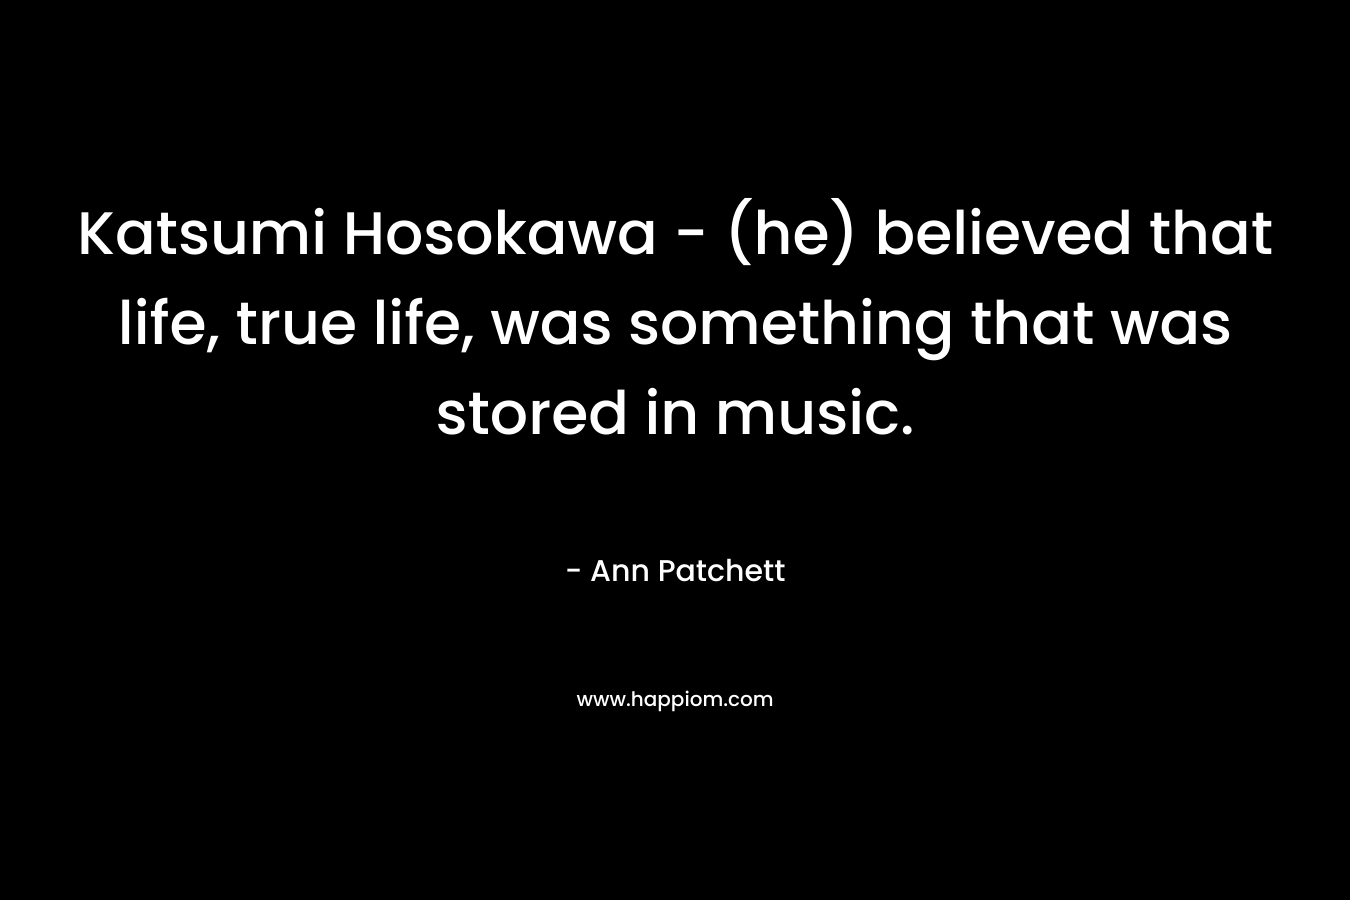 Katsumi Hosokawa - (he) believed that life, true life, was something that was stored in music.